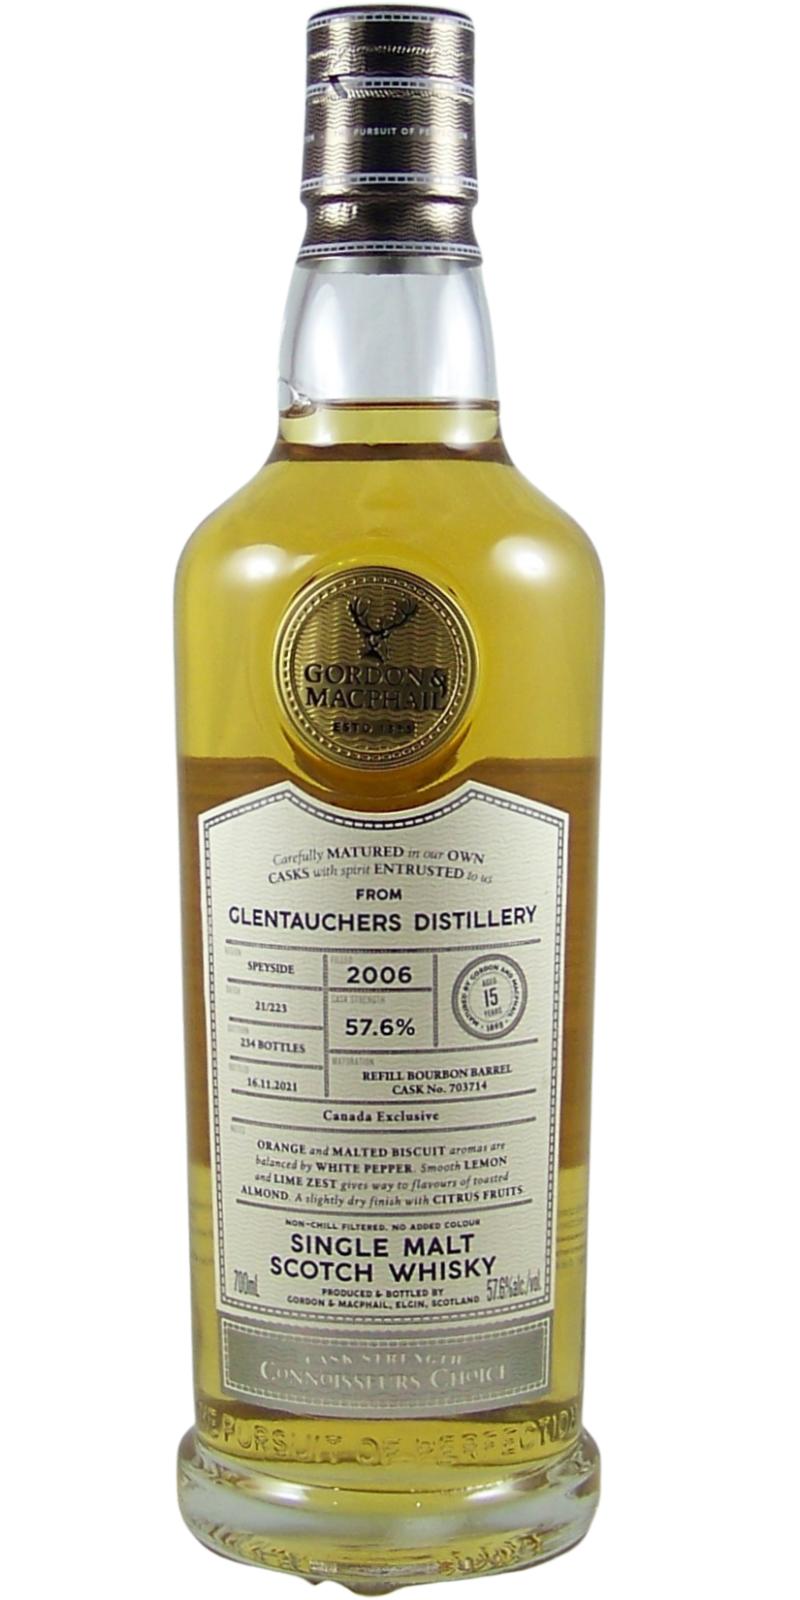 Glentauchers 2006 GM Connoisseurs Choice Refill Bourbon barrel Canada Exclusive 57.6% 700ml